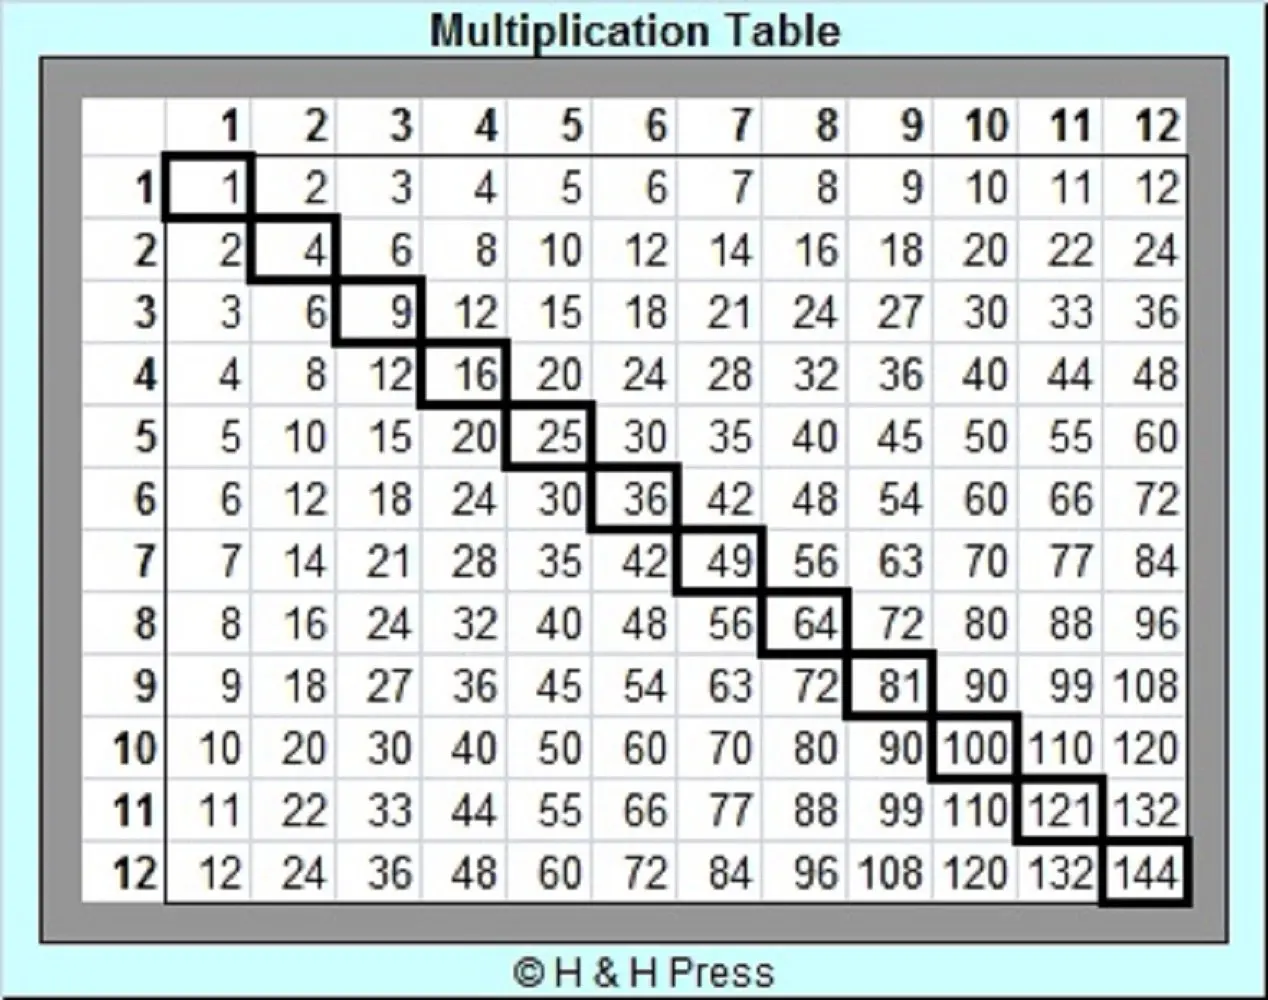 12 умножить на три. Таблица умножения. Таблица умножения Пифагора. Multiplication Table games. Таблица умножения крупно.